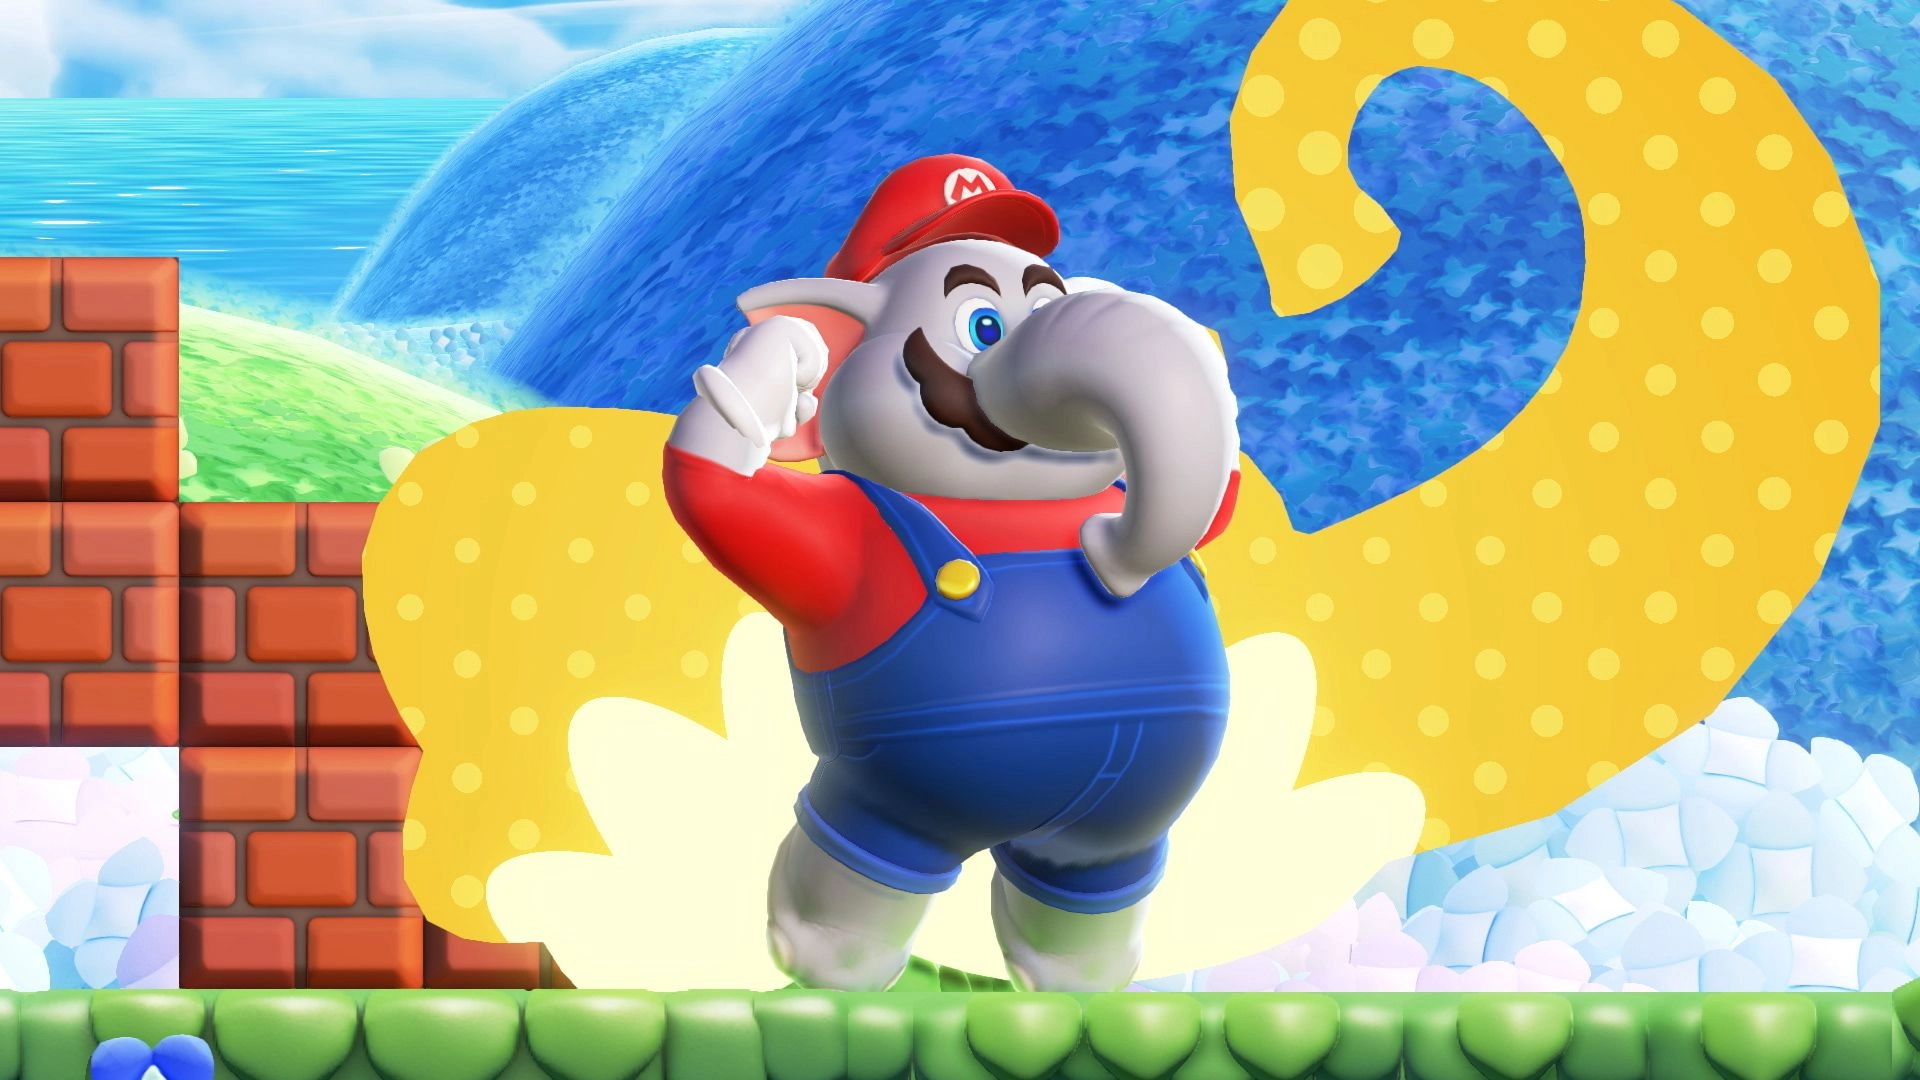 Mario's Future: More Uncertain than a Koopa Shell Bounce